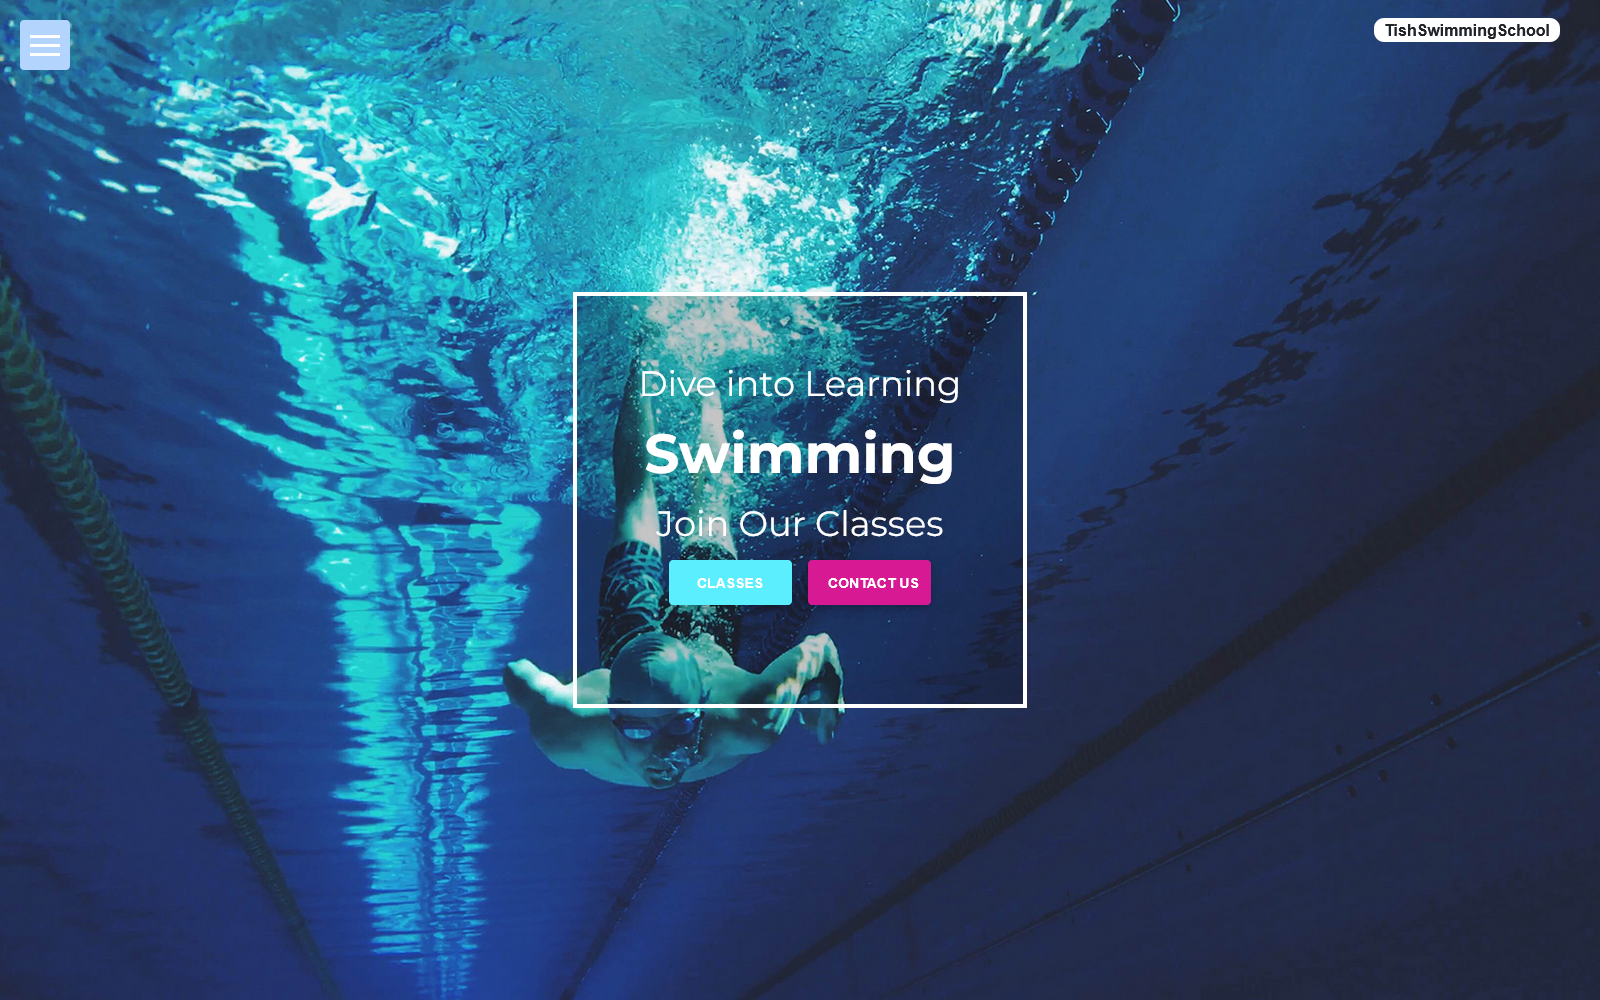 TishSwimmingSchool - Swimming School WordPress Theme